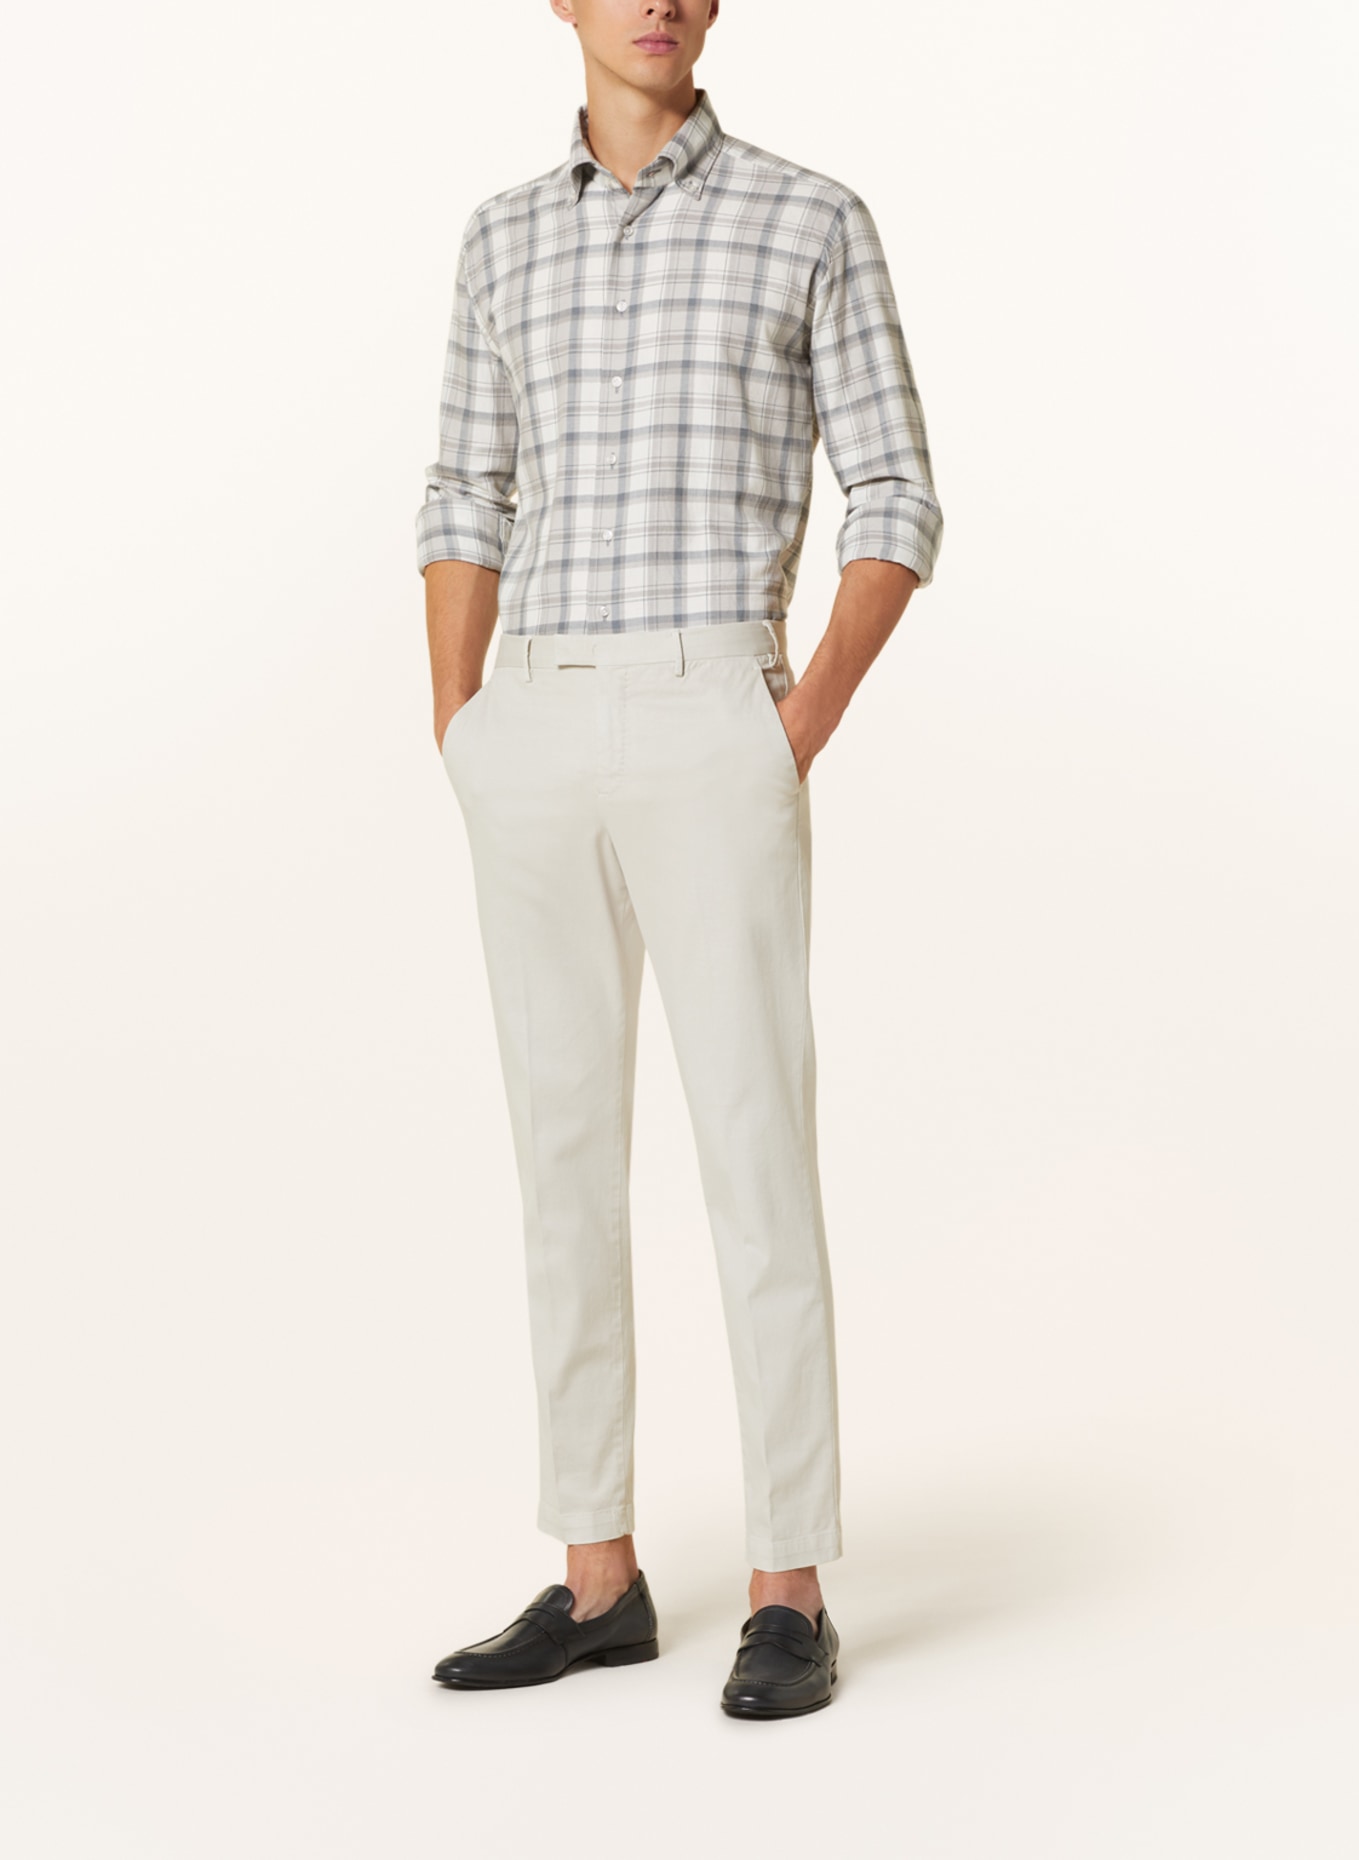 ARTIGIANO Flannel shirt classic fit, Color: WHITE/ LIGHT GRAY/ GRAY (Image 2)